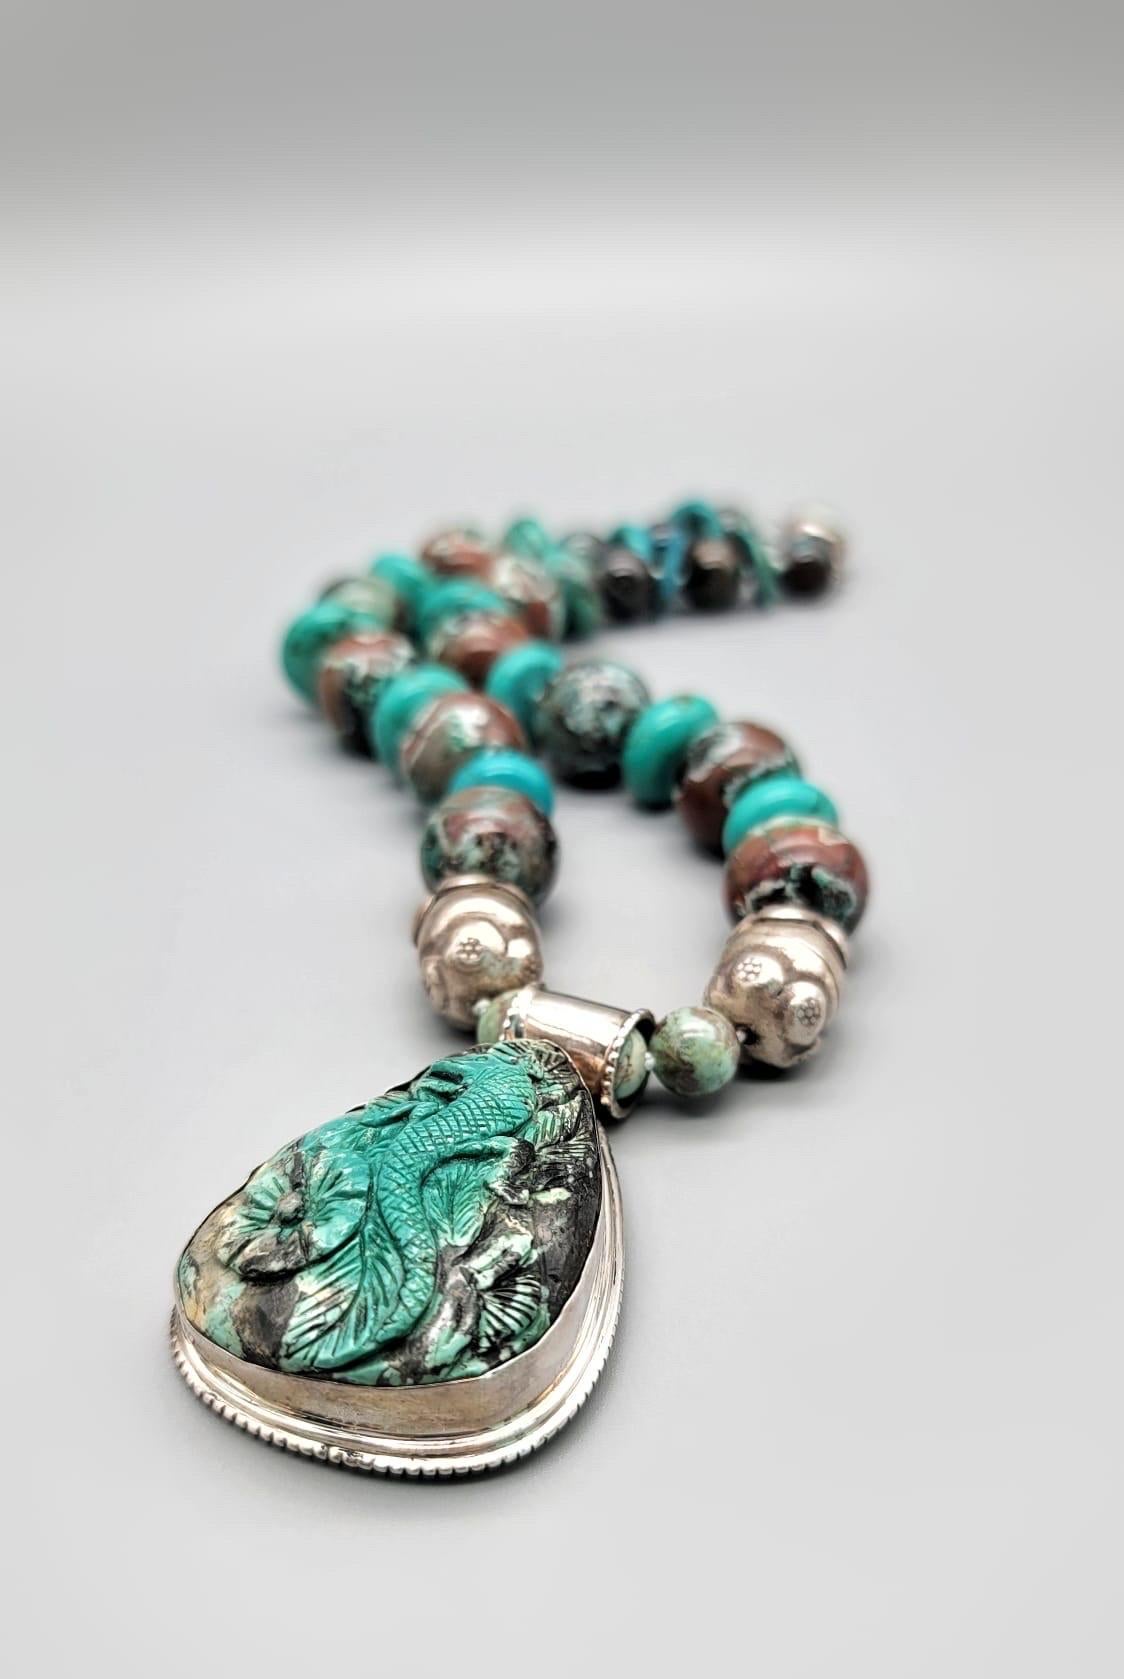 A.Jeschel  Turquoise Necklace Carved lizard pendant  4